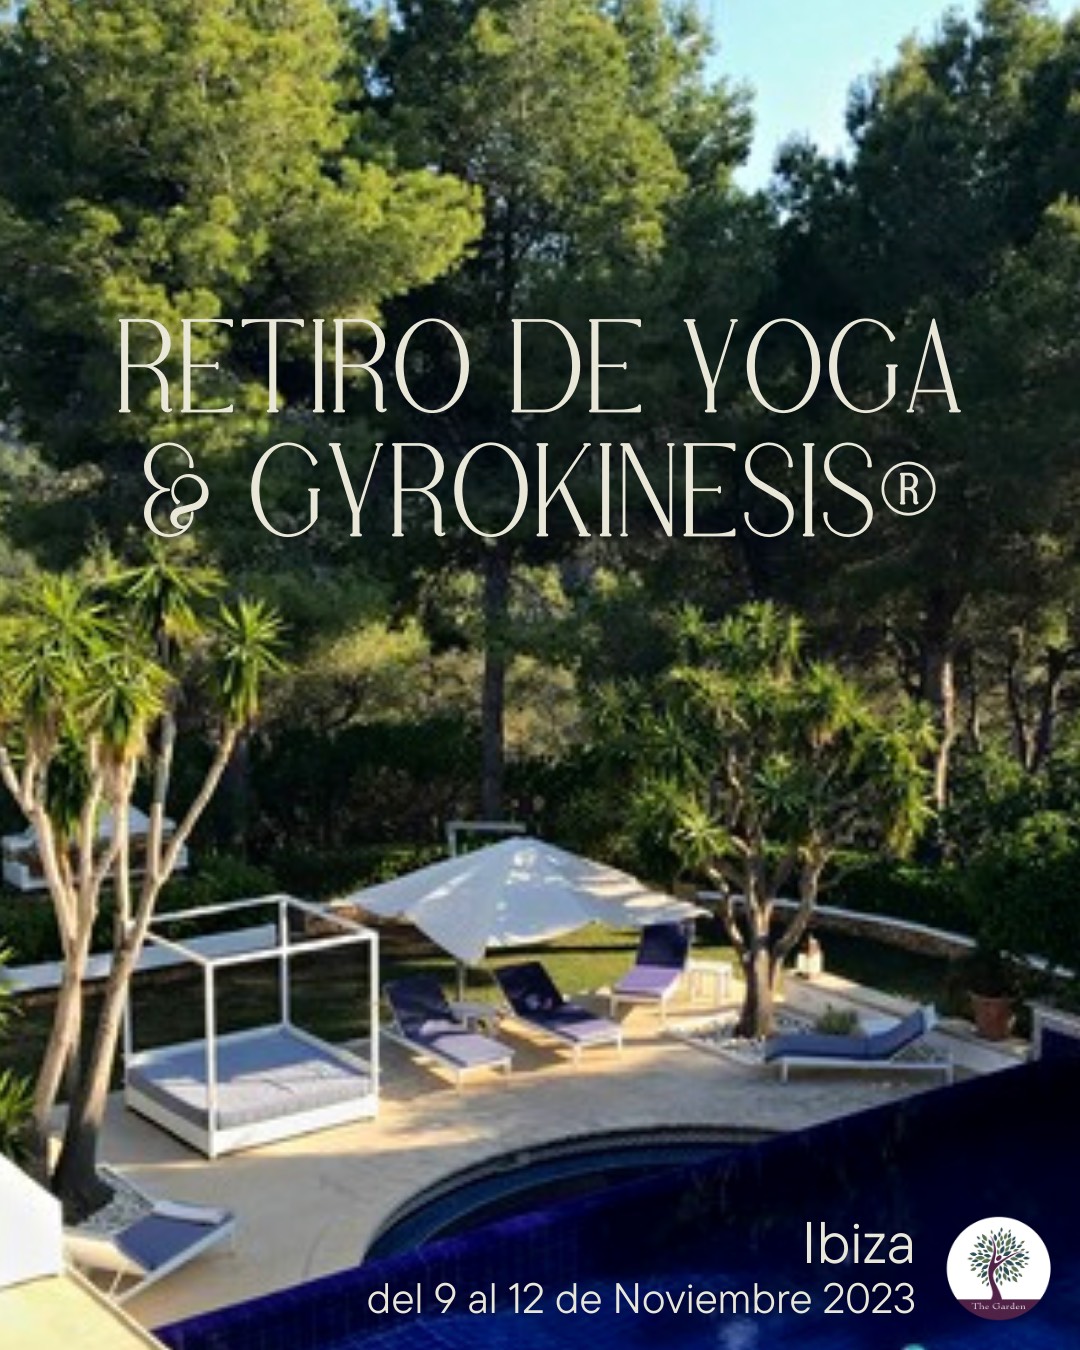 Retiro de Yoga Y Gyrokinesis en Ibiza